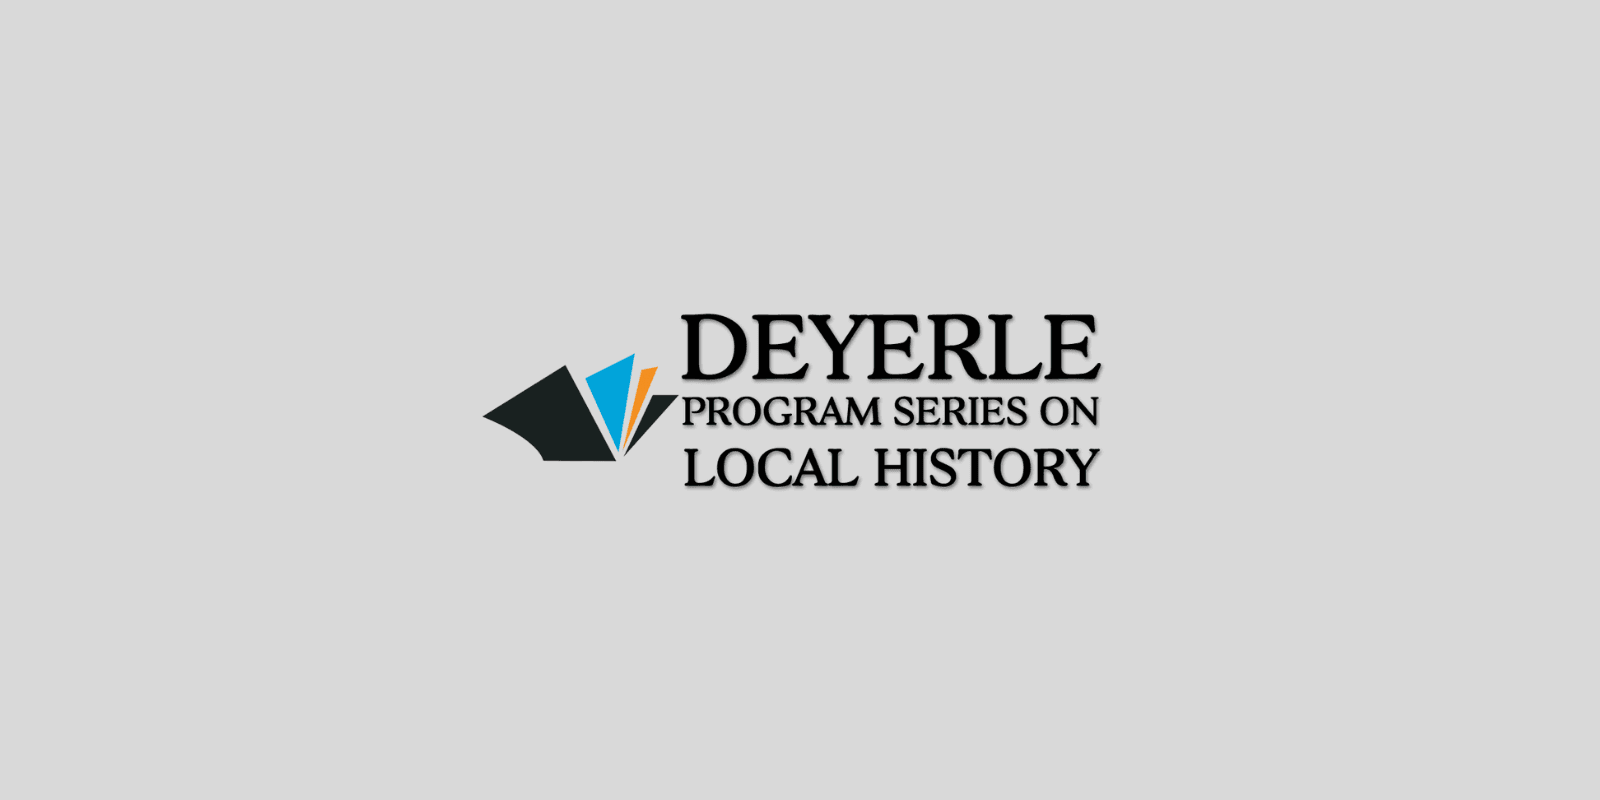 Deyerle Program Series on Local History